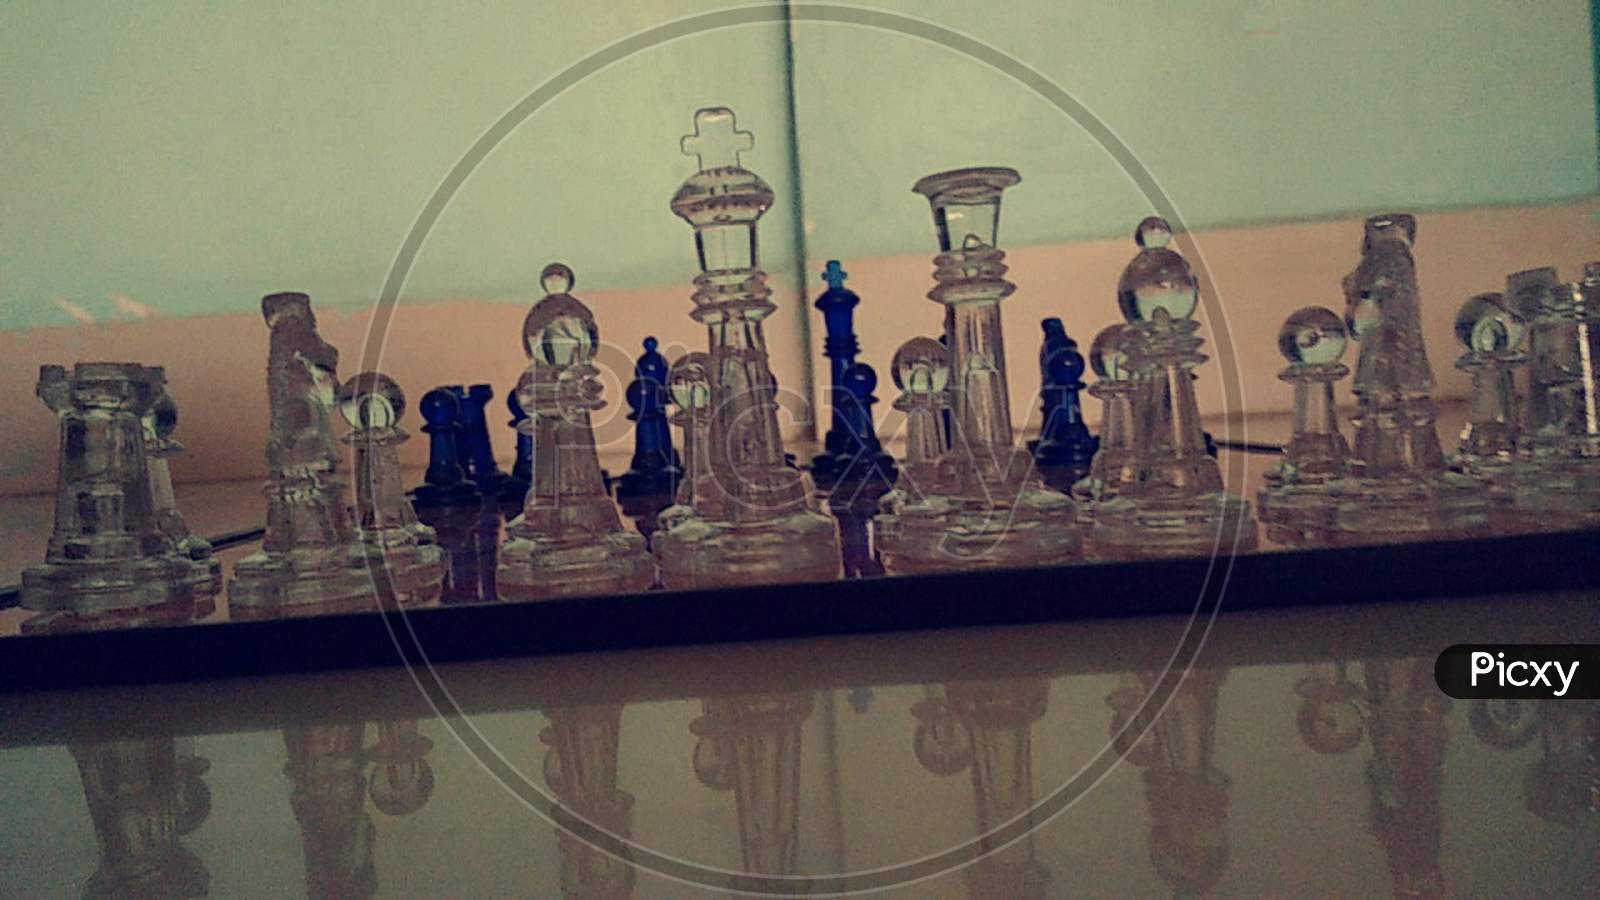 Its chess board